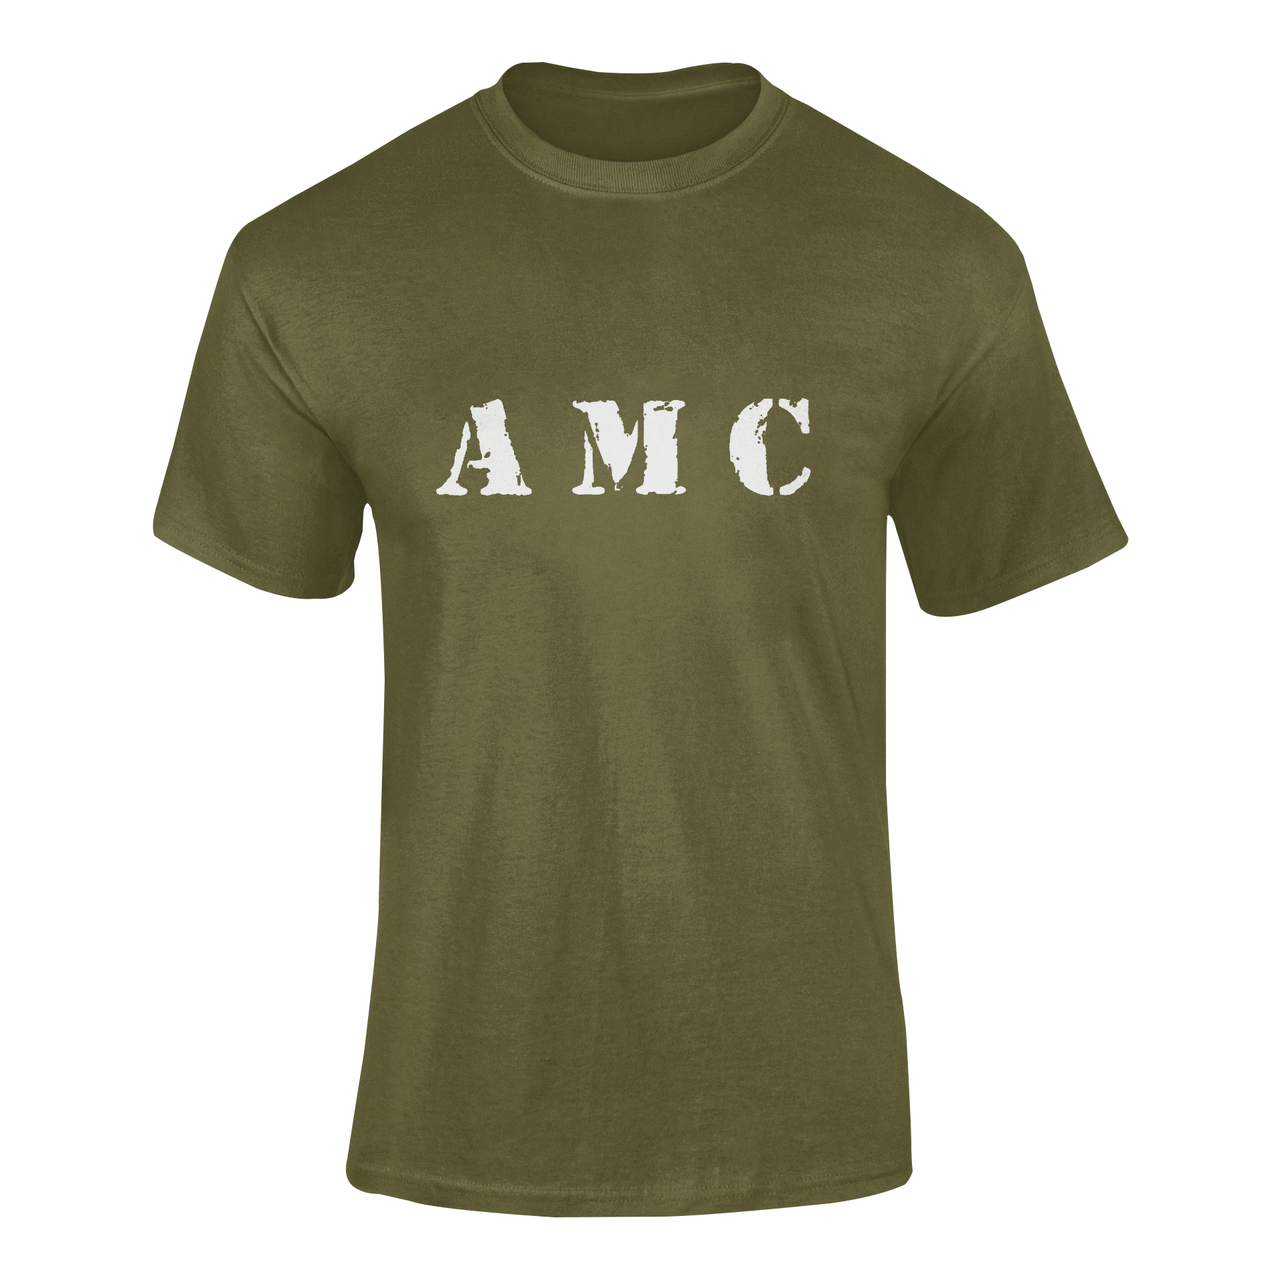 Military T-shirt - AMC (Men)